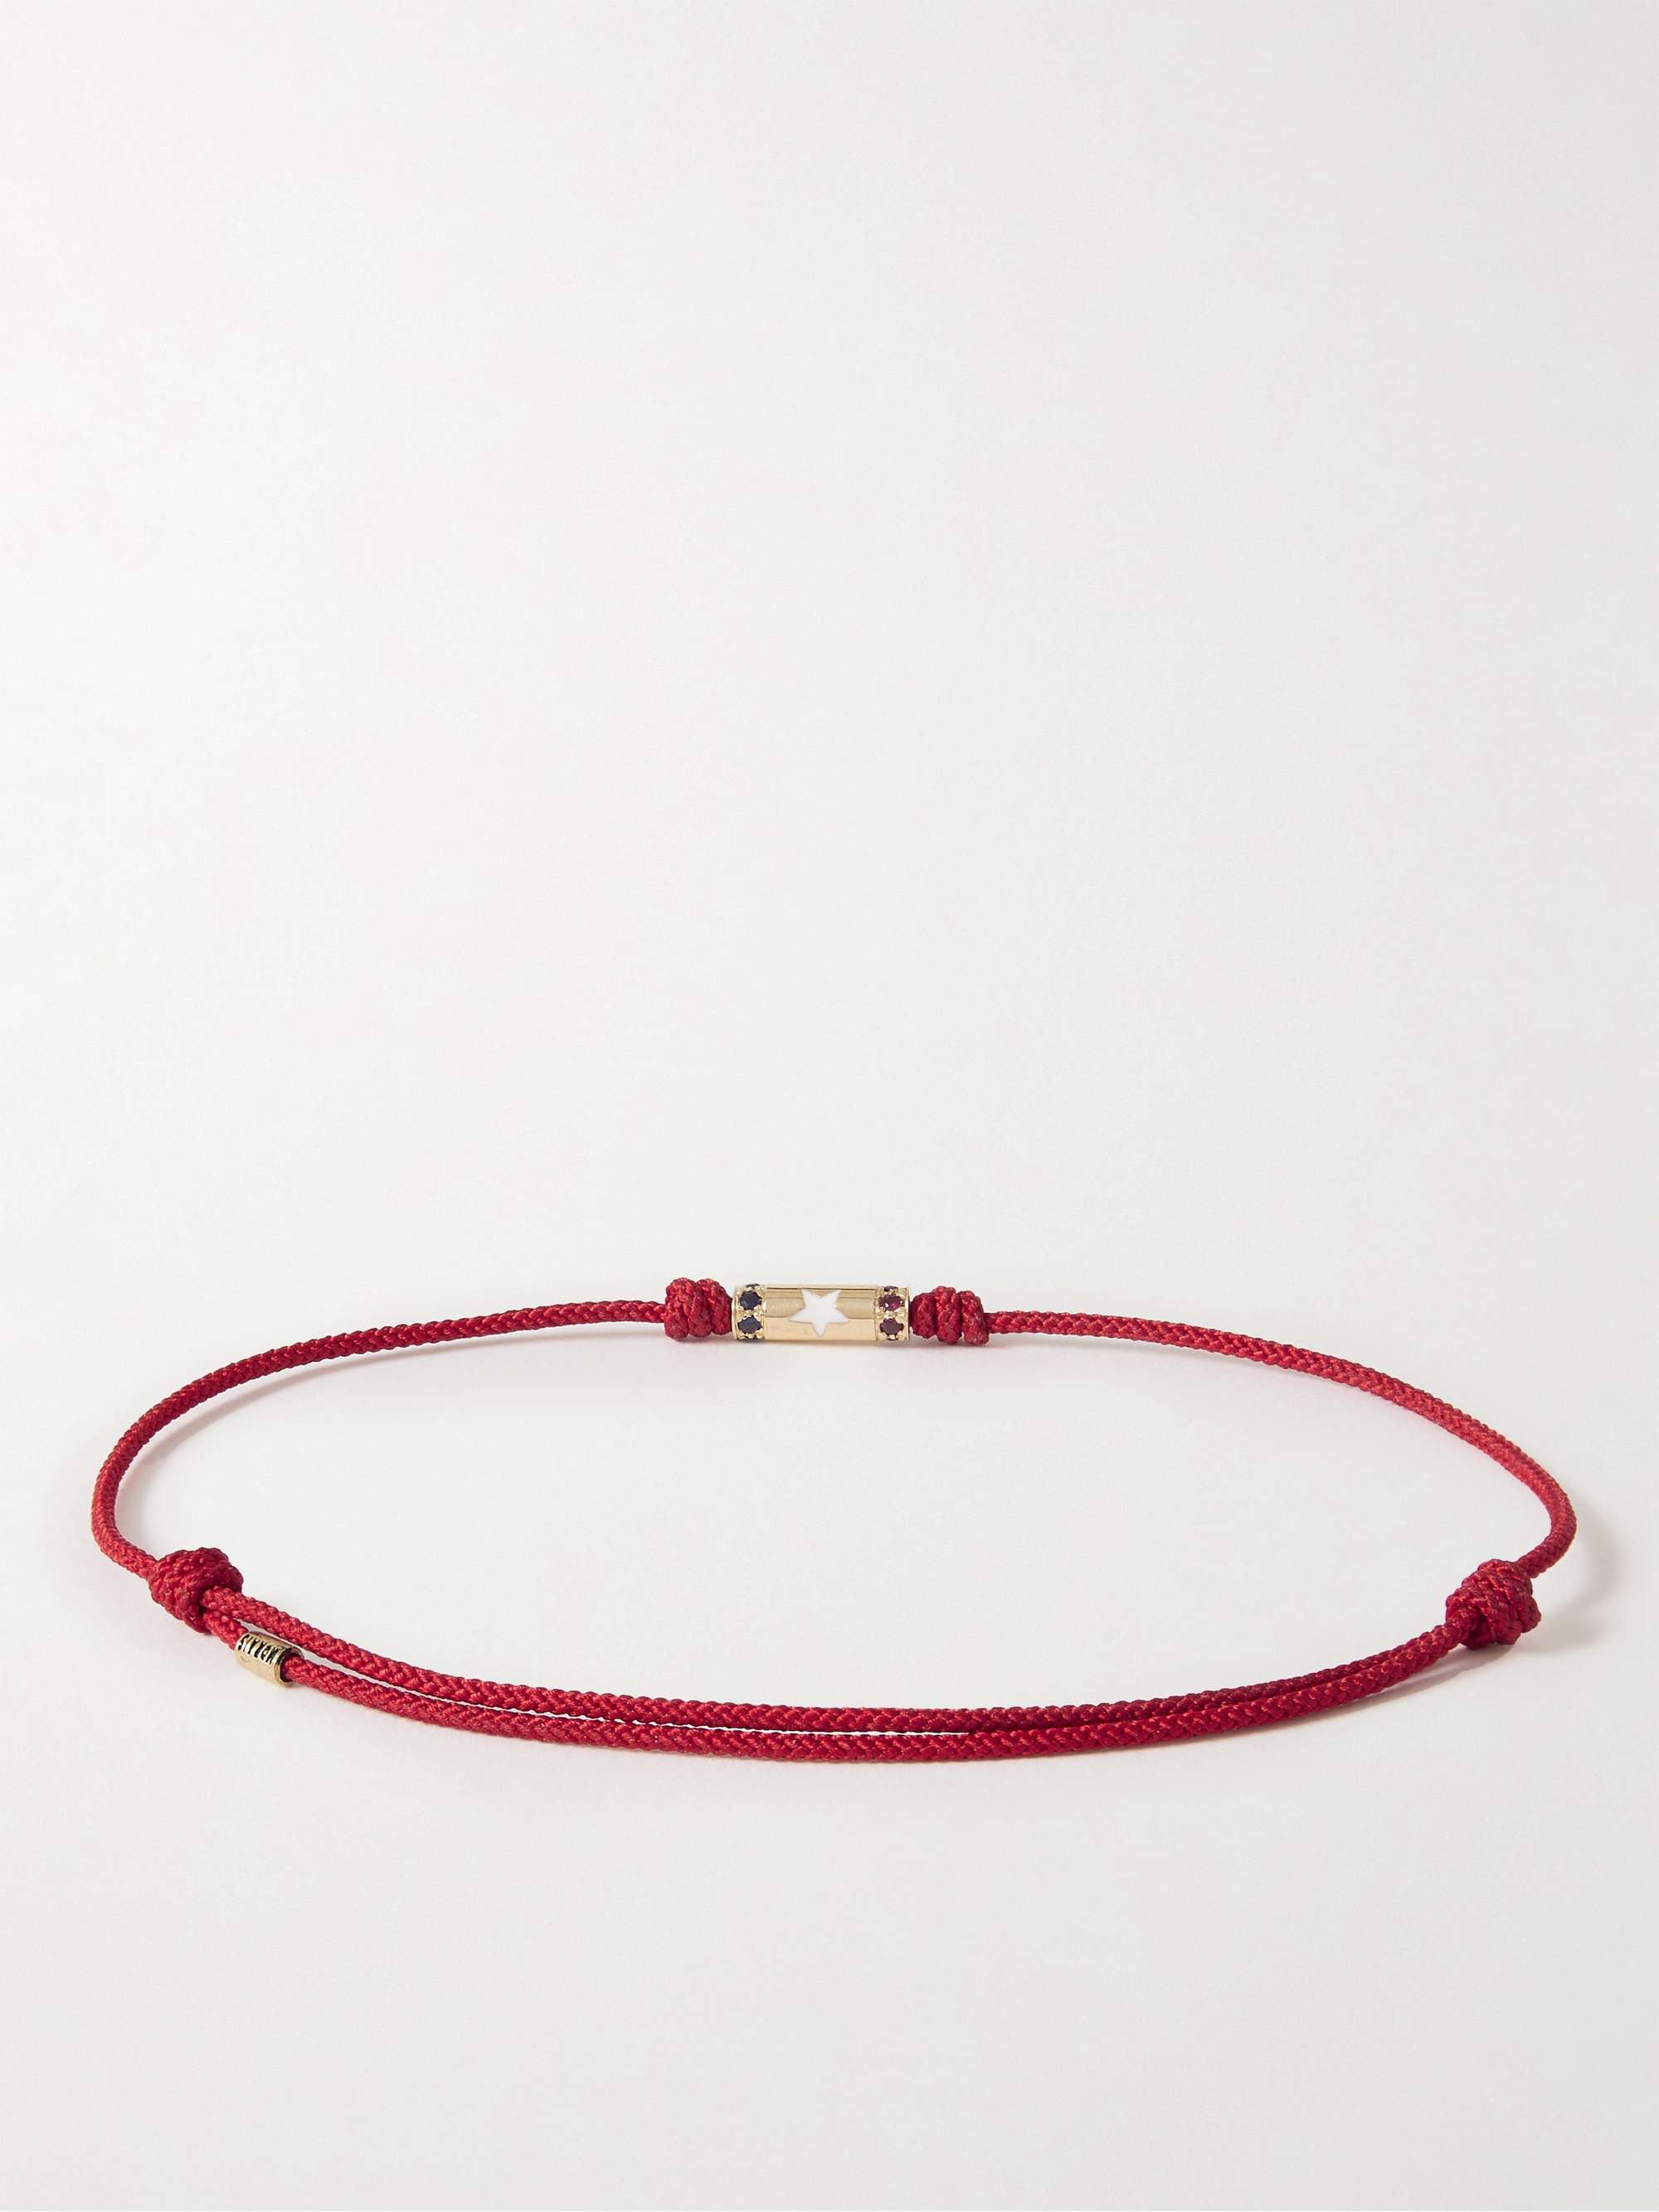 LUIS MORAIS Gold, Ruby and Cord Bracelet